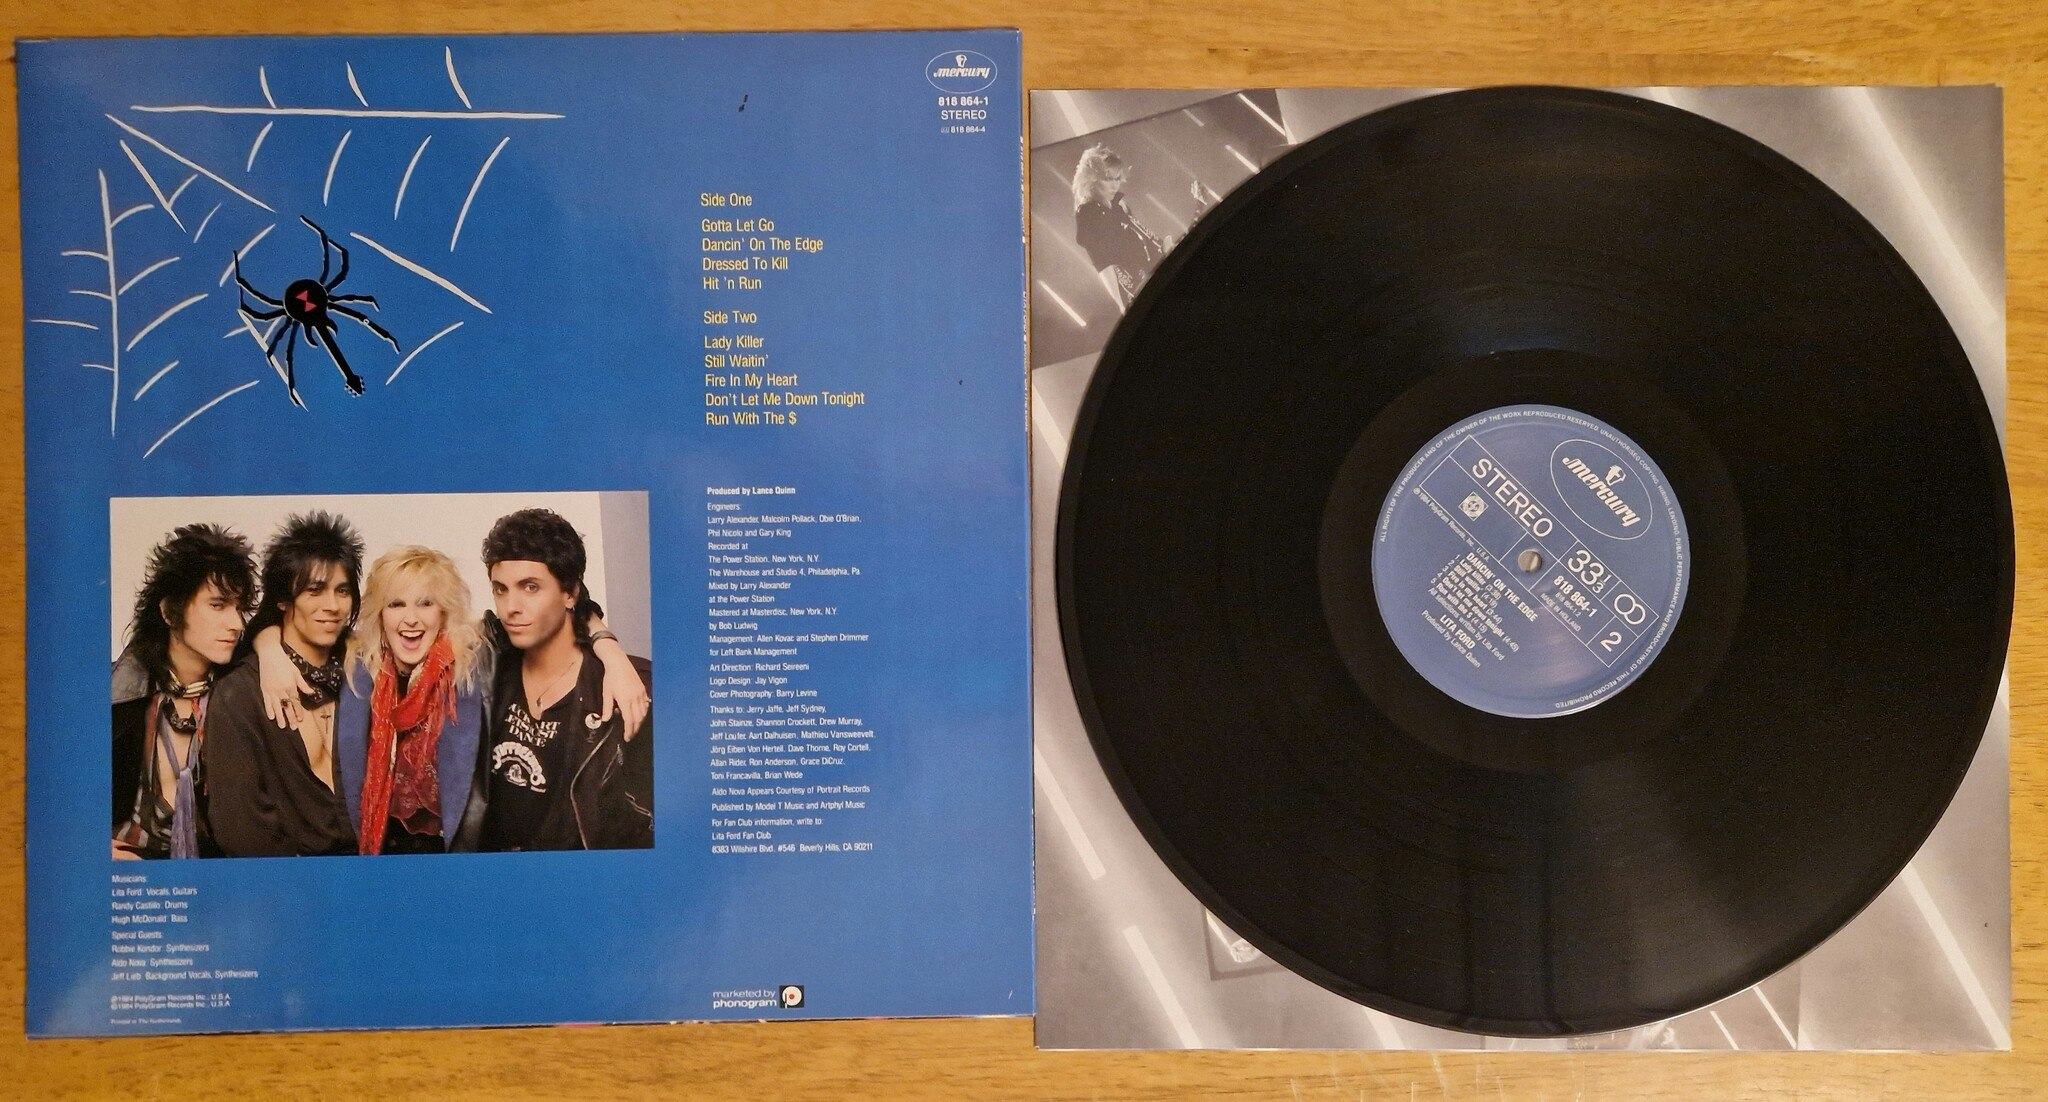 Lita Ford, Dancin on the edge. Vinyl LP